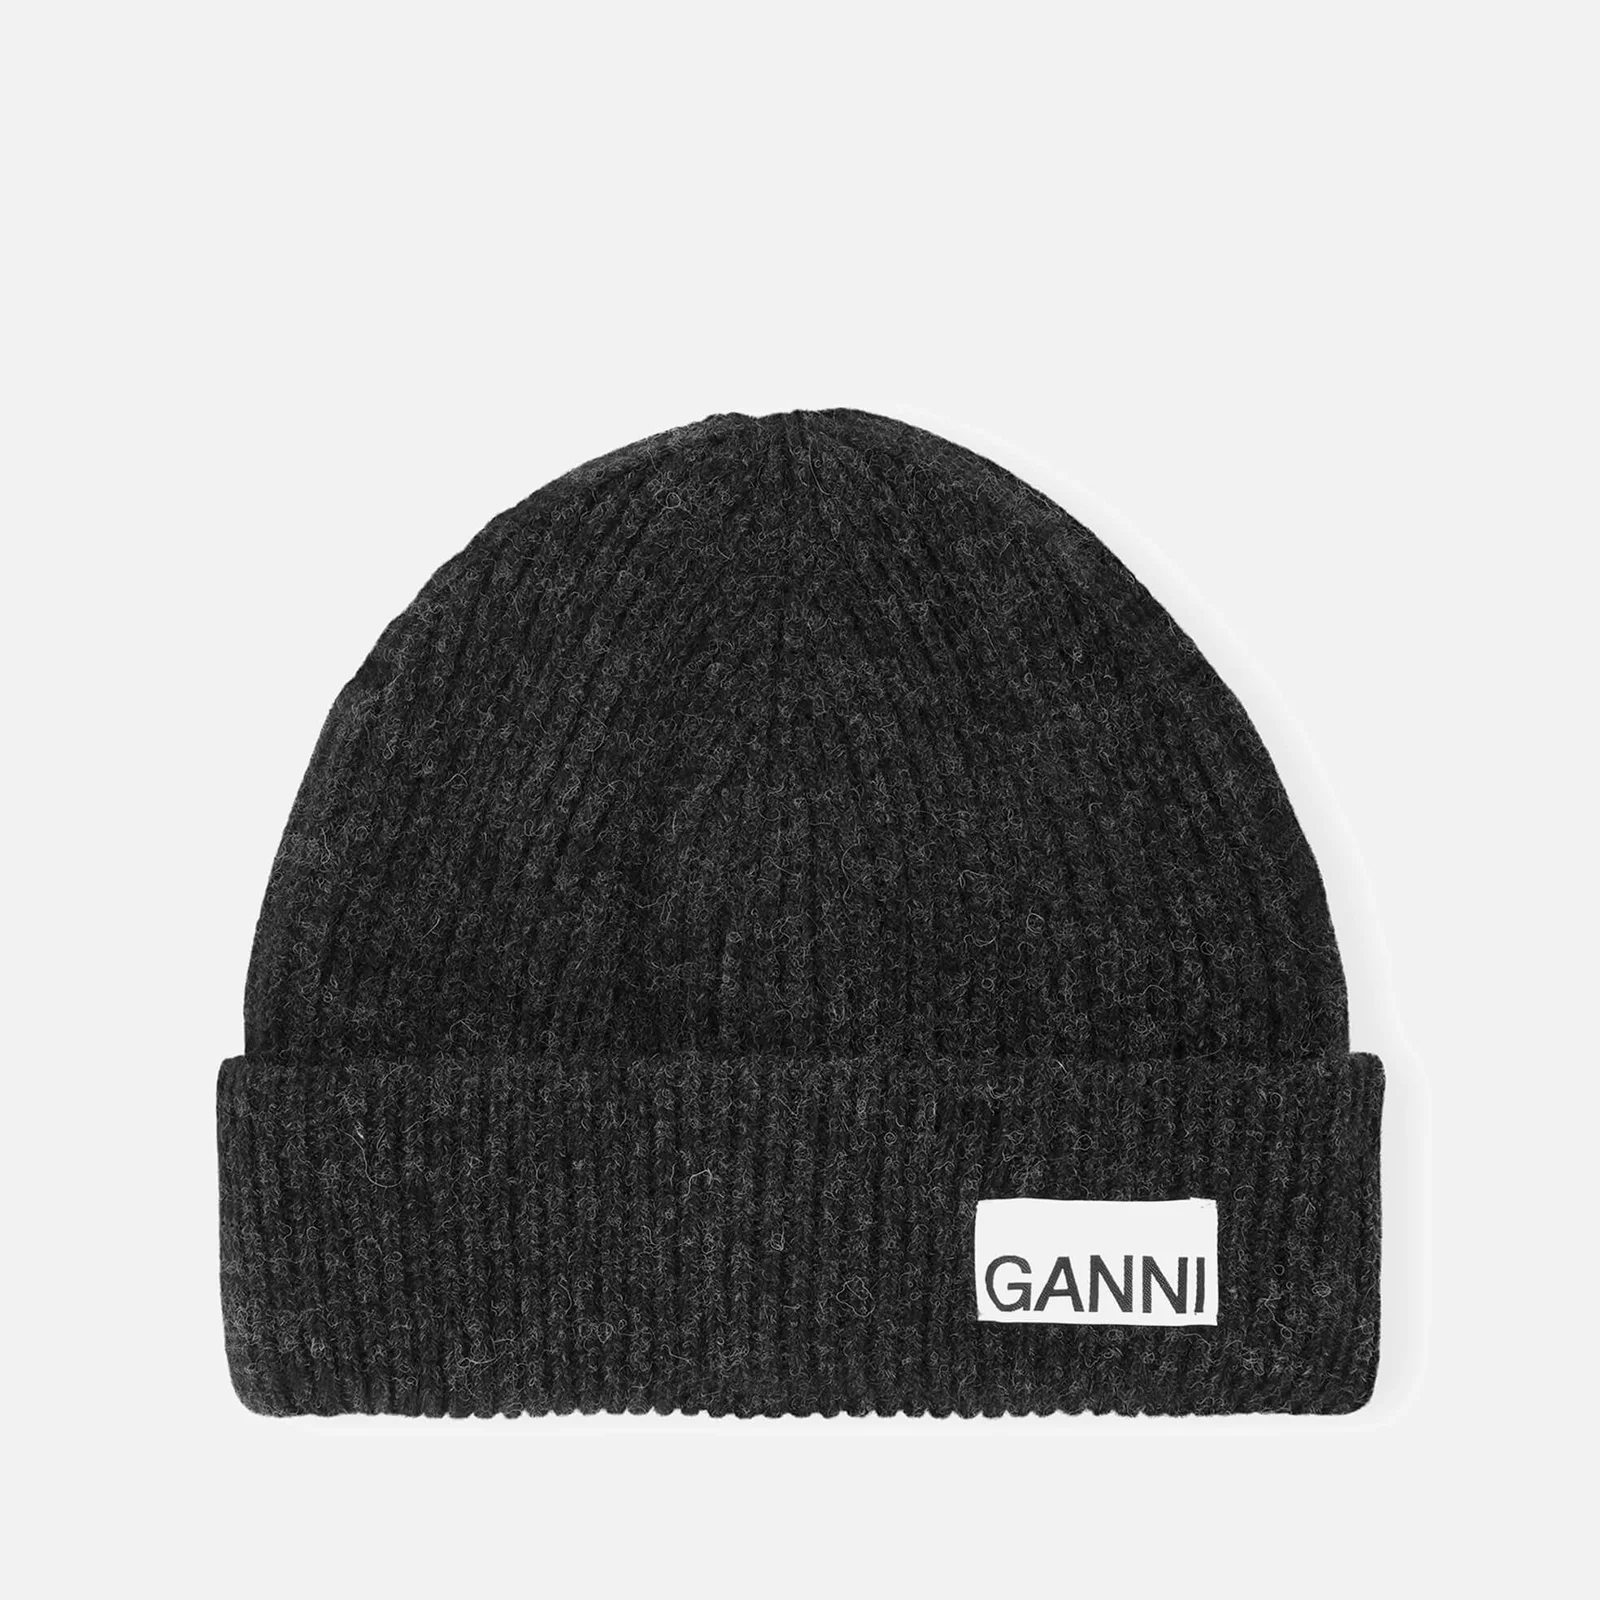 Ganni Light Structured Rib Knit Beanie Image 1